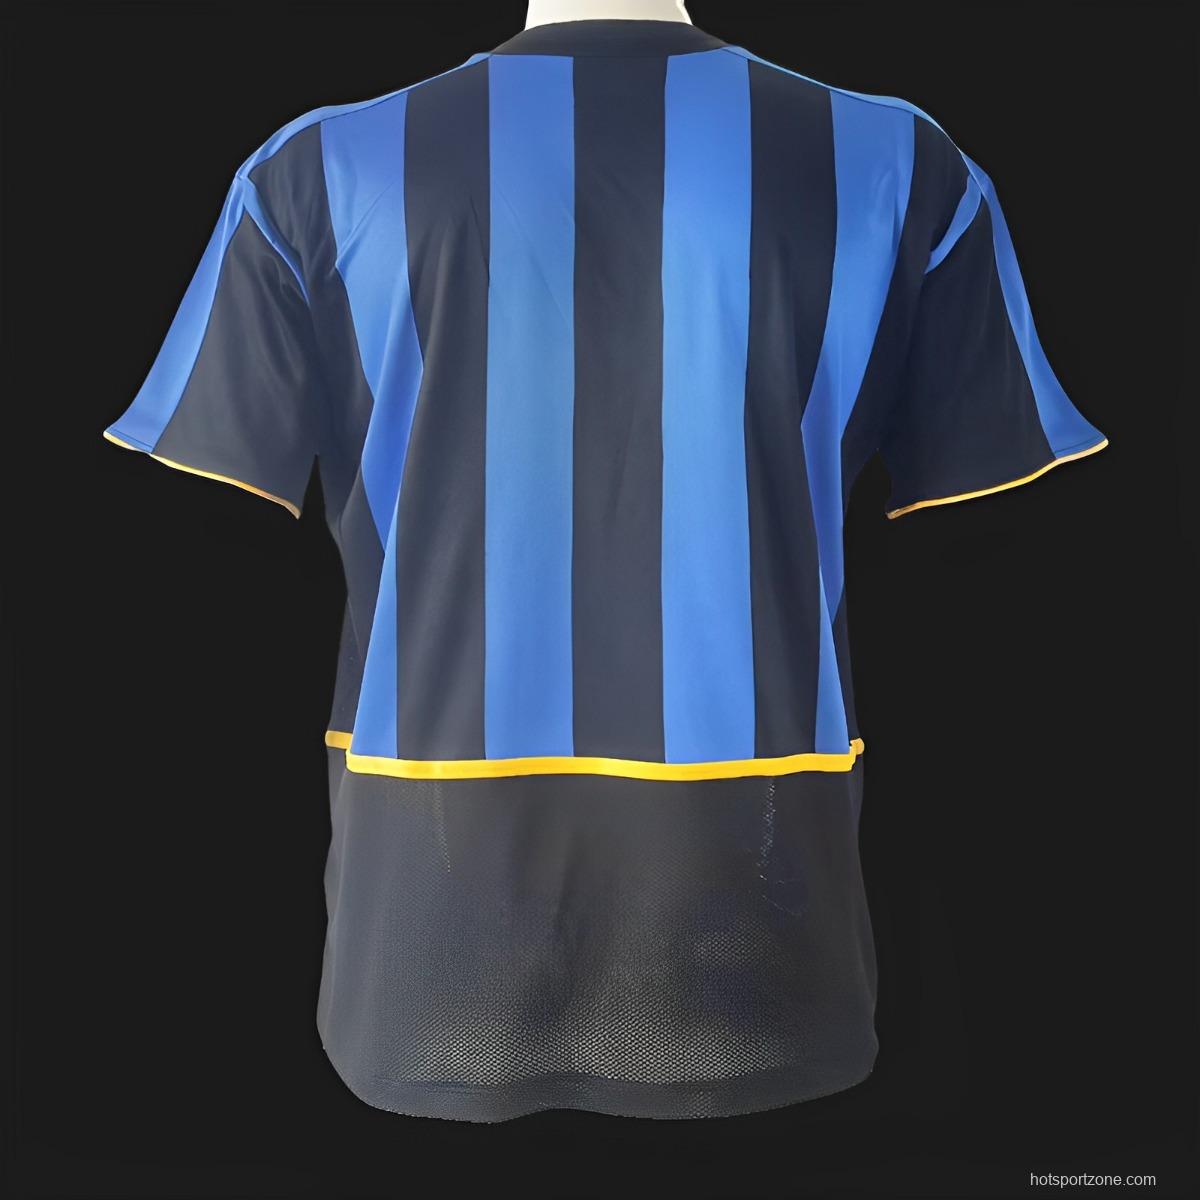 Retro 02/04 Inter Milan Home Jersey